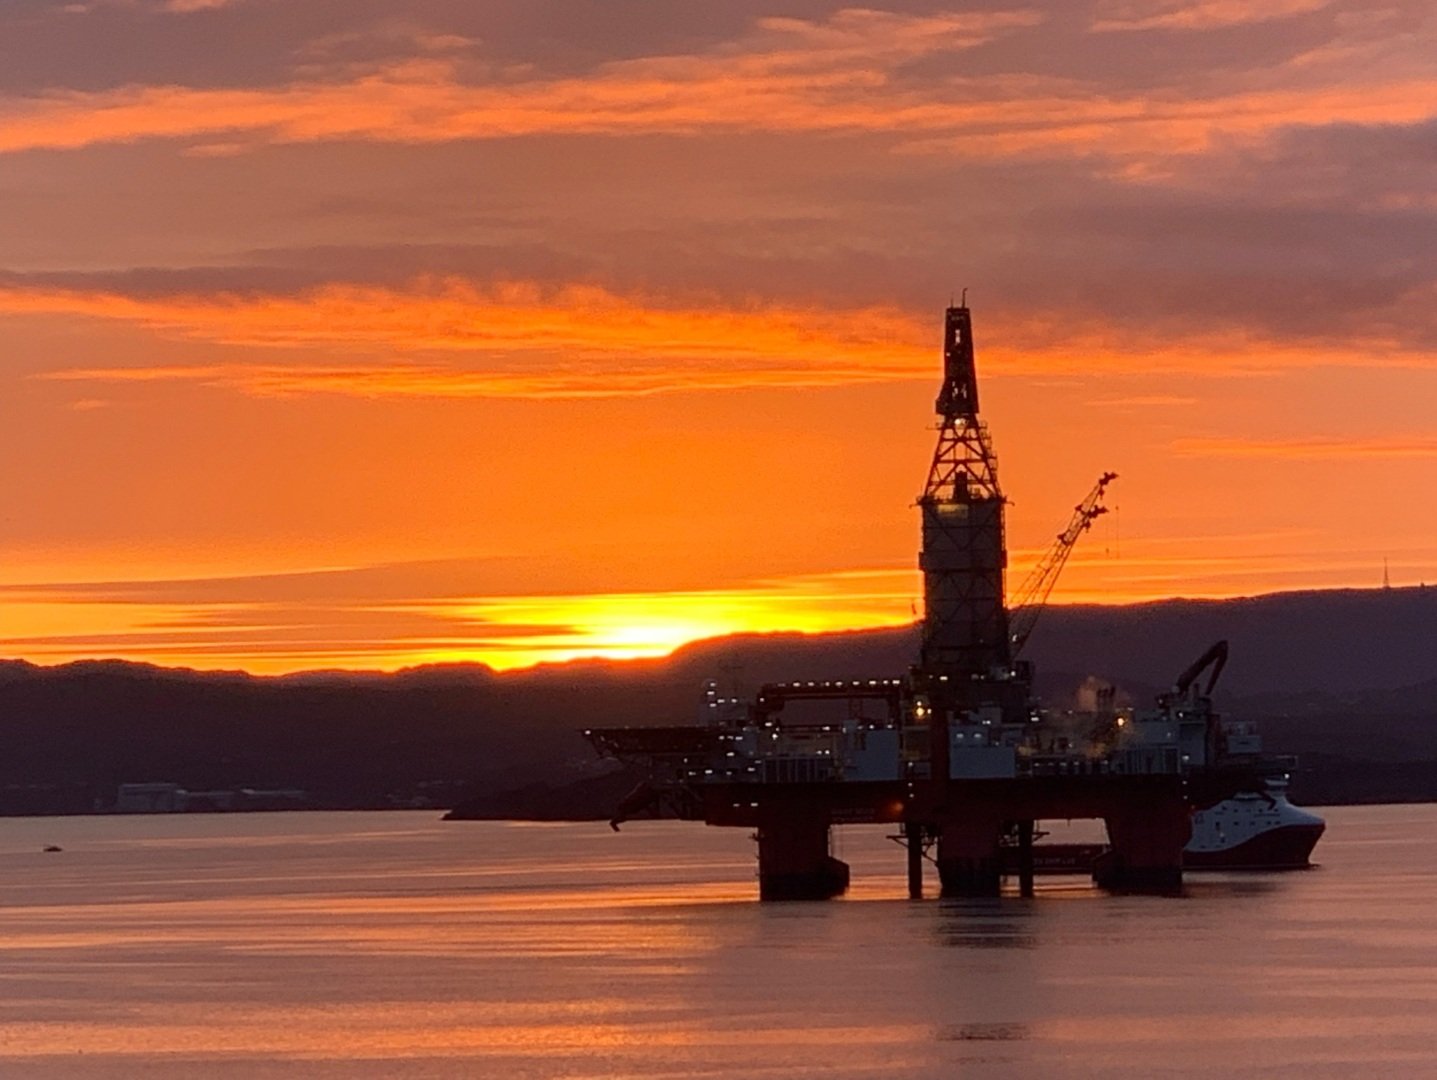 Oil Rig in Sotra, Norway, near Bergen - Photography by Jan Vindenes